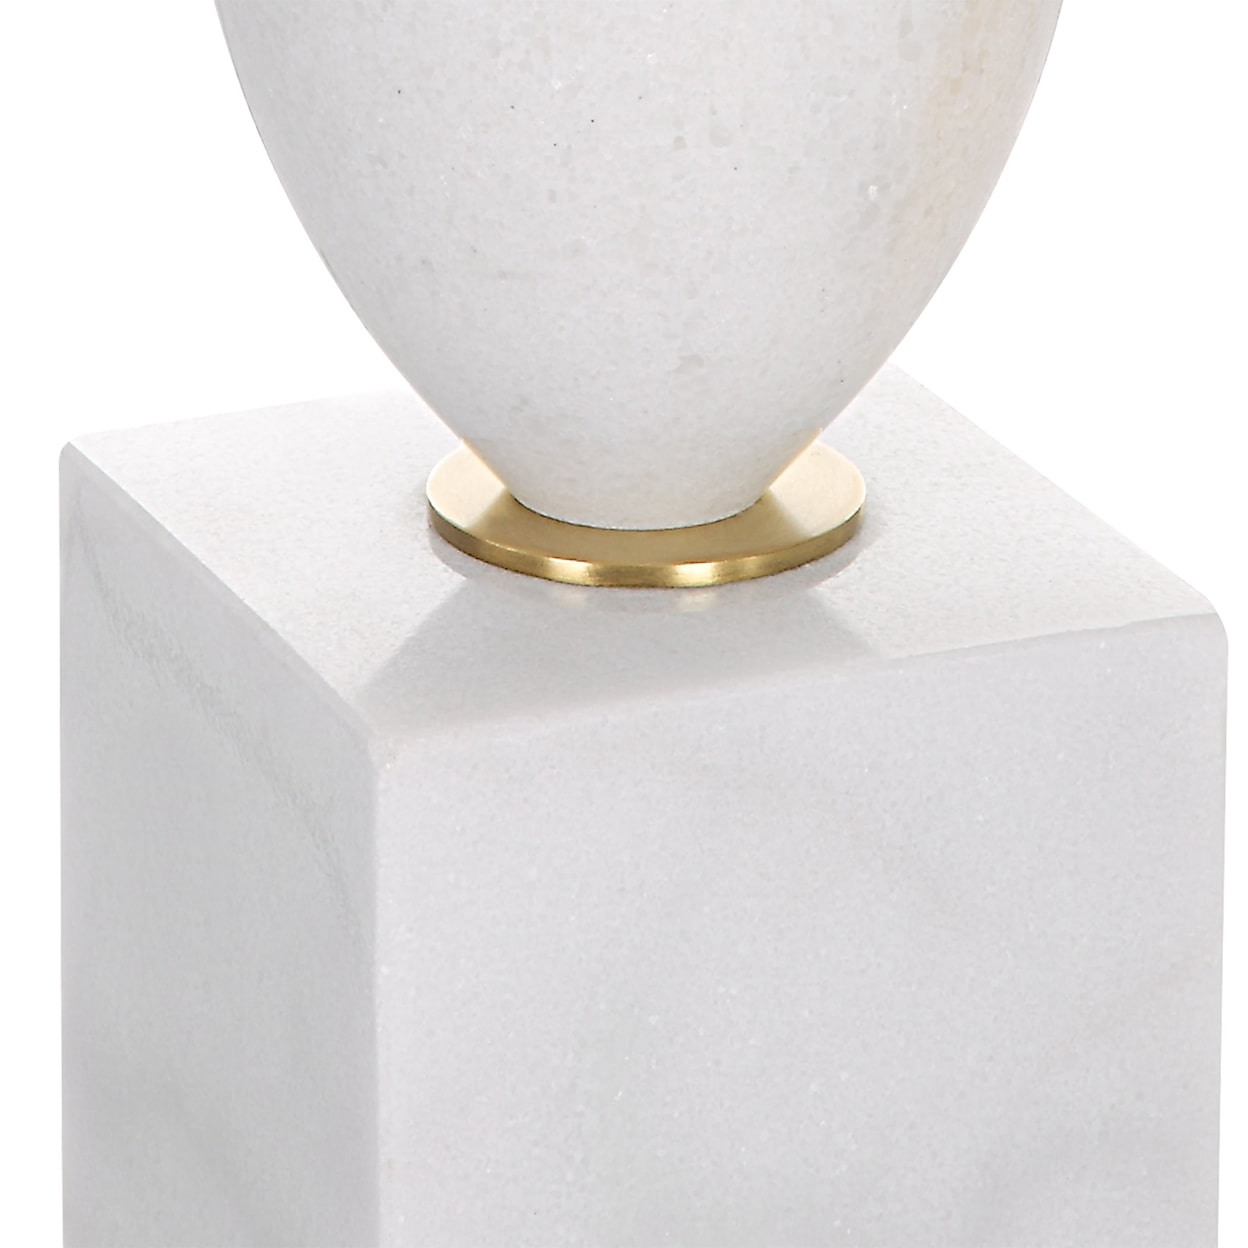 Uttermost Regalia Regalia White Marble Table Lamp